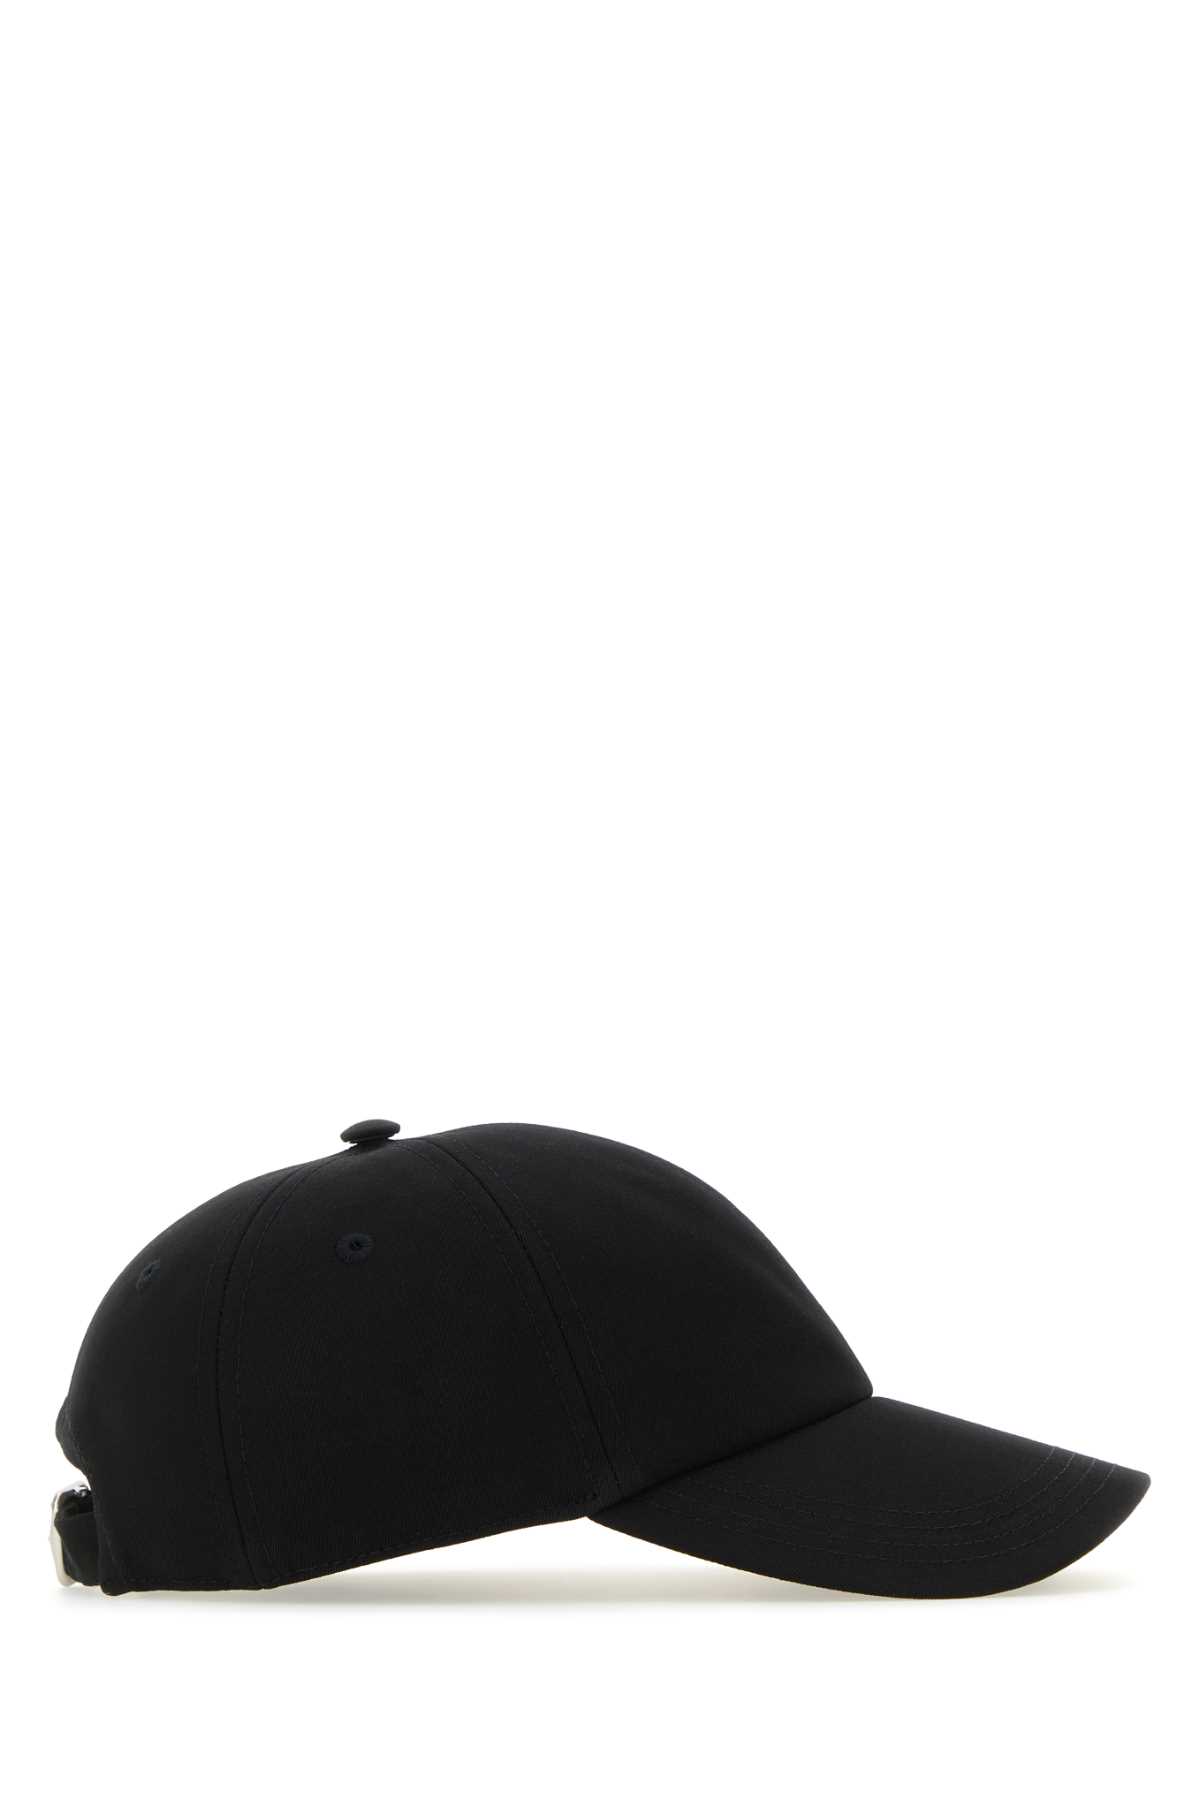 BURBERRY BLACK POLYESTER BLEND BASEBALL CAP